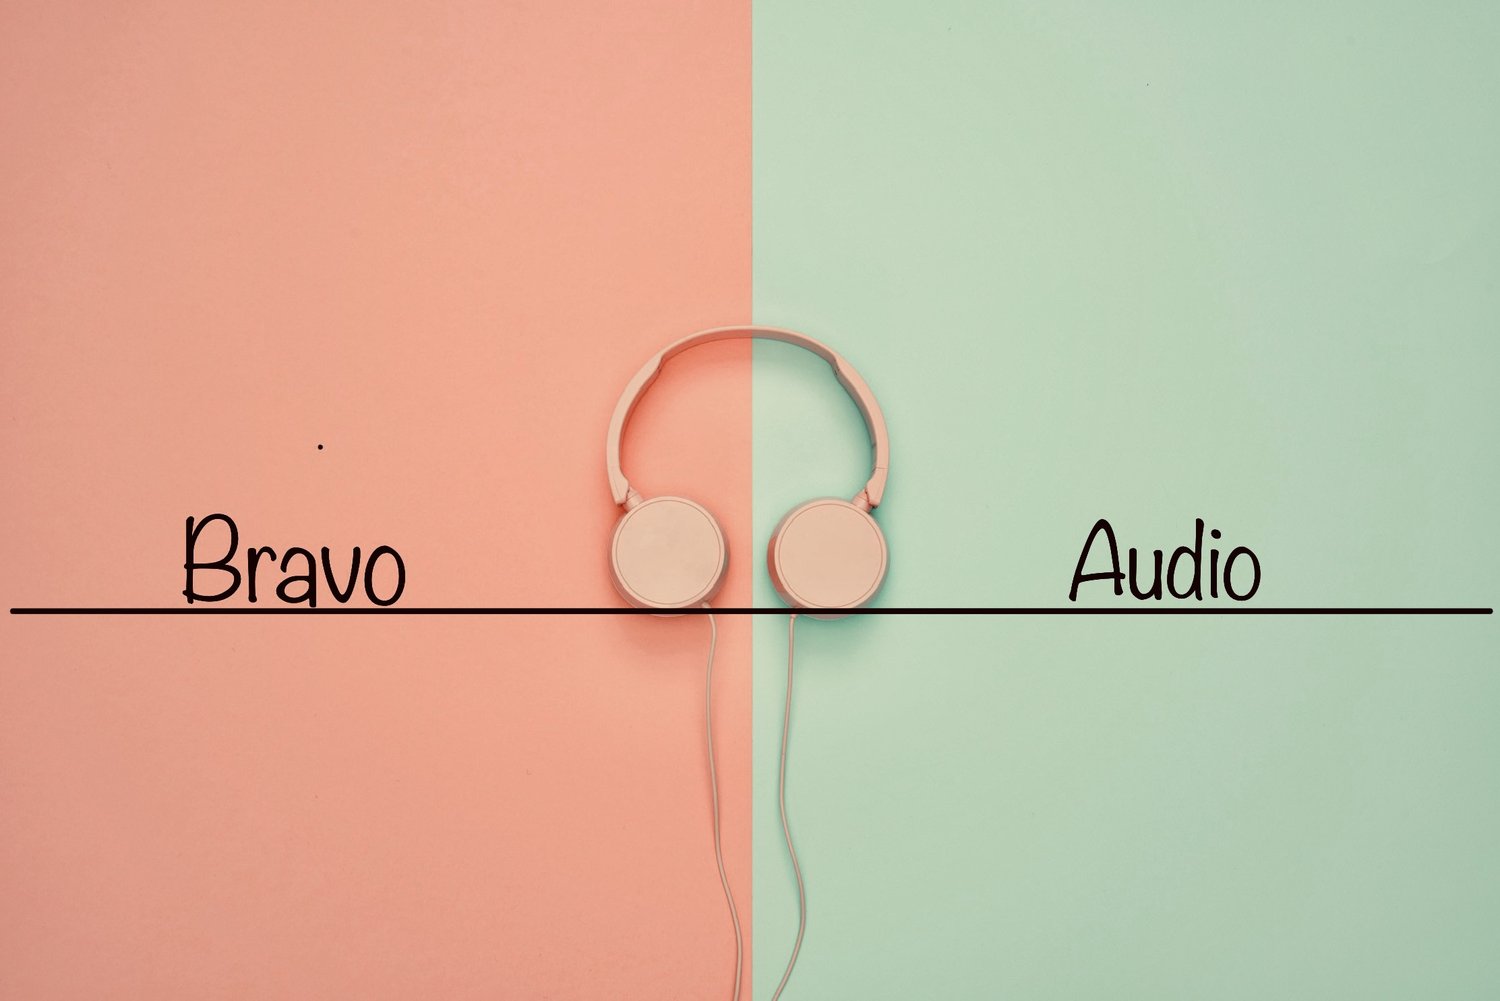 Bravo Audio